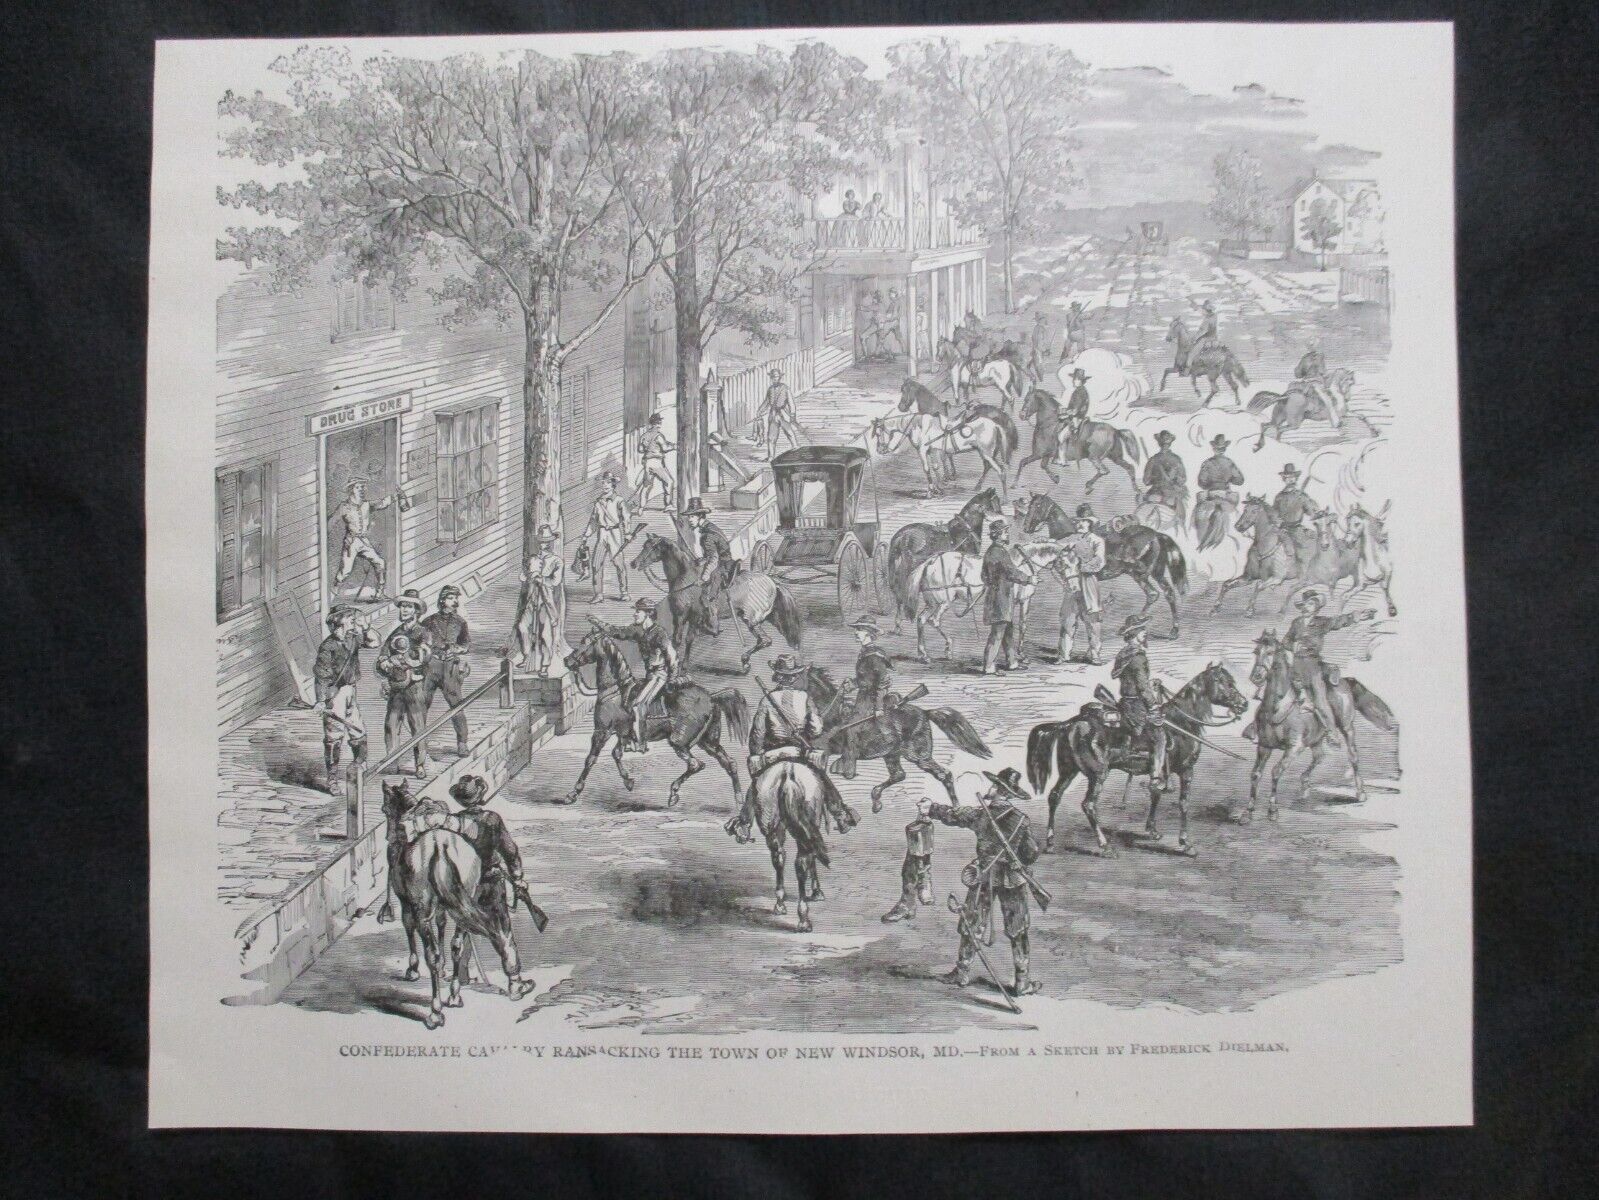 1884 Civil War Print - Confederate Cavalry Ransacking New Windsor, Maryland